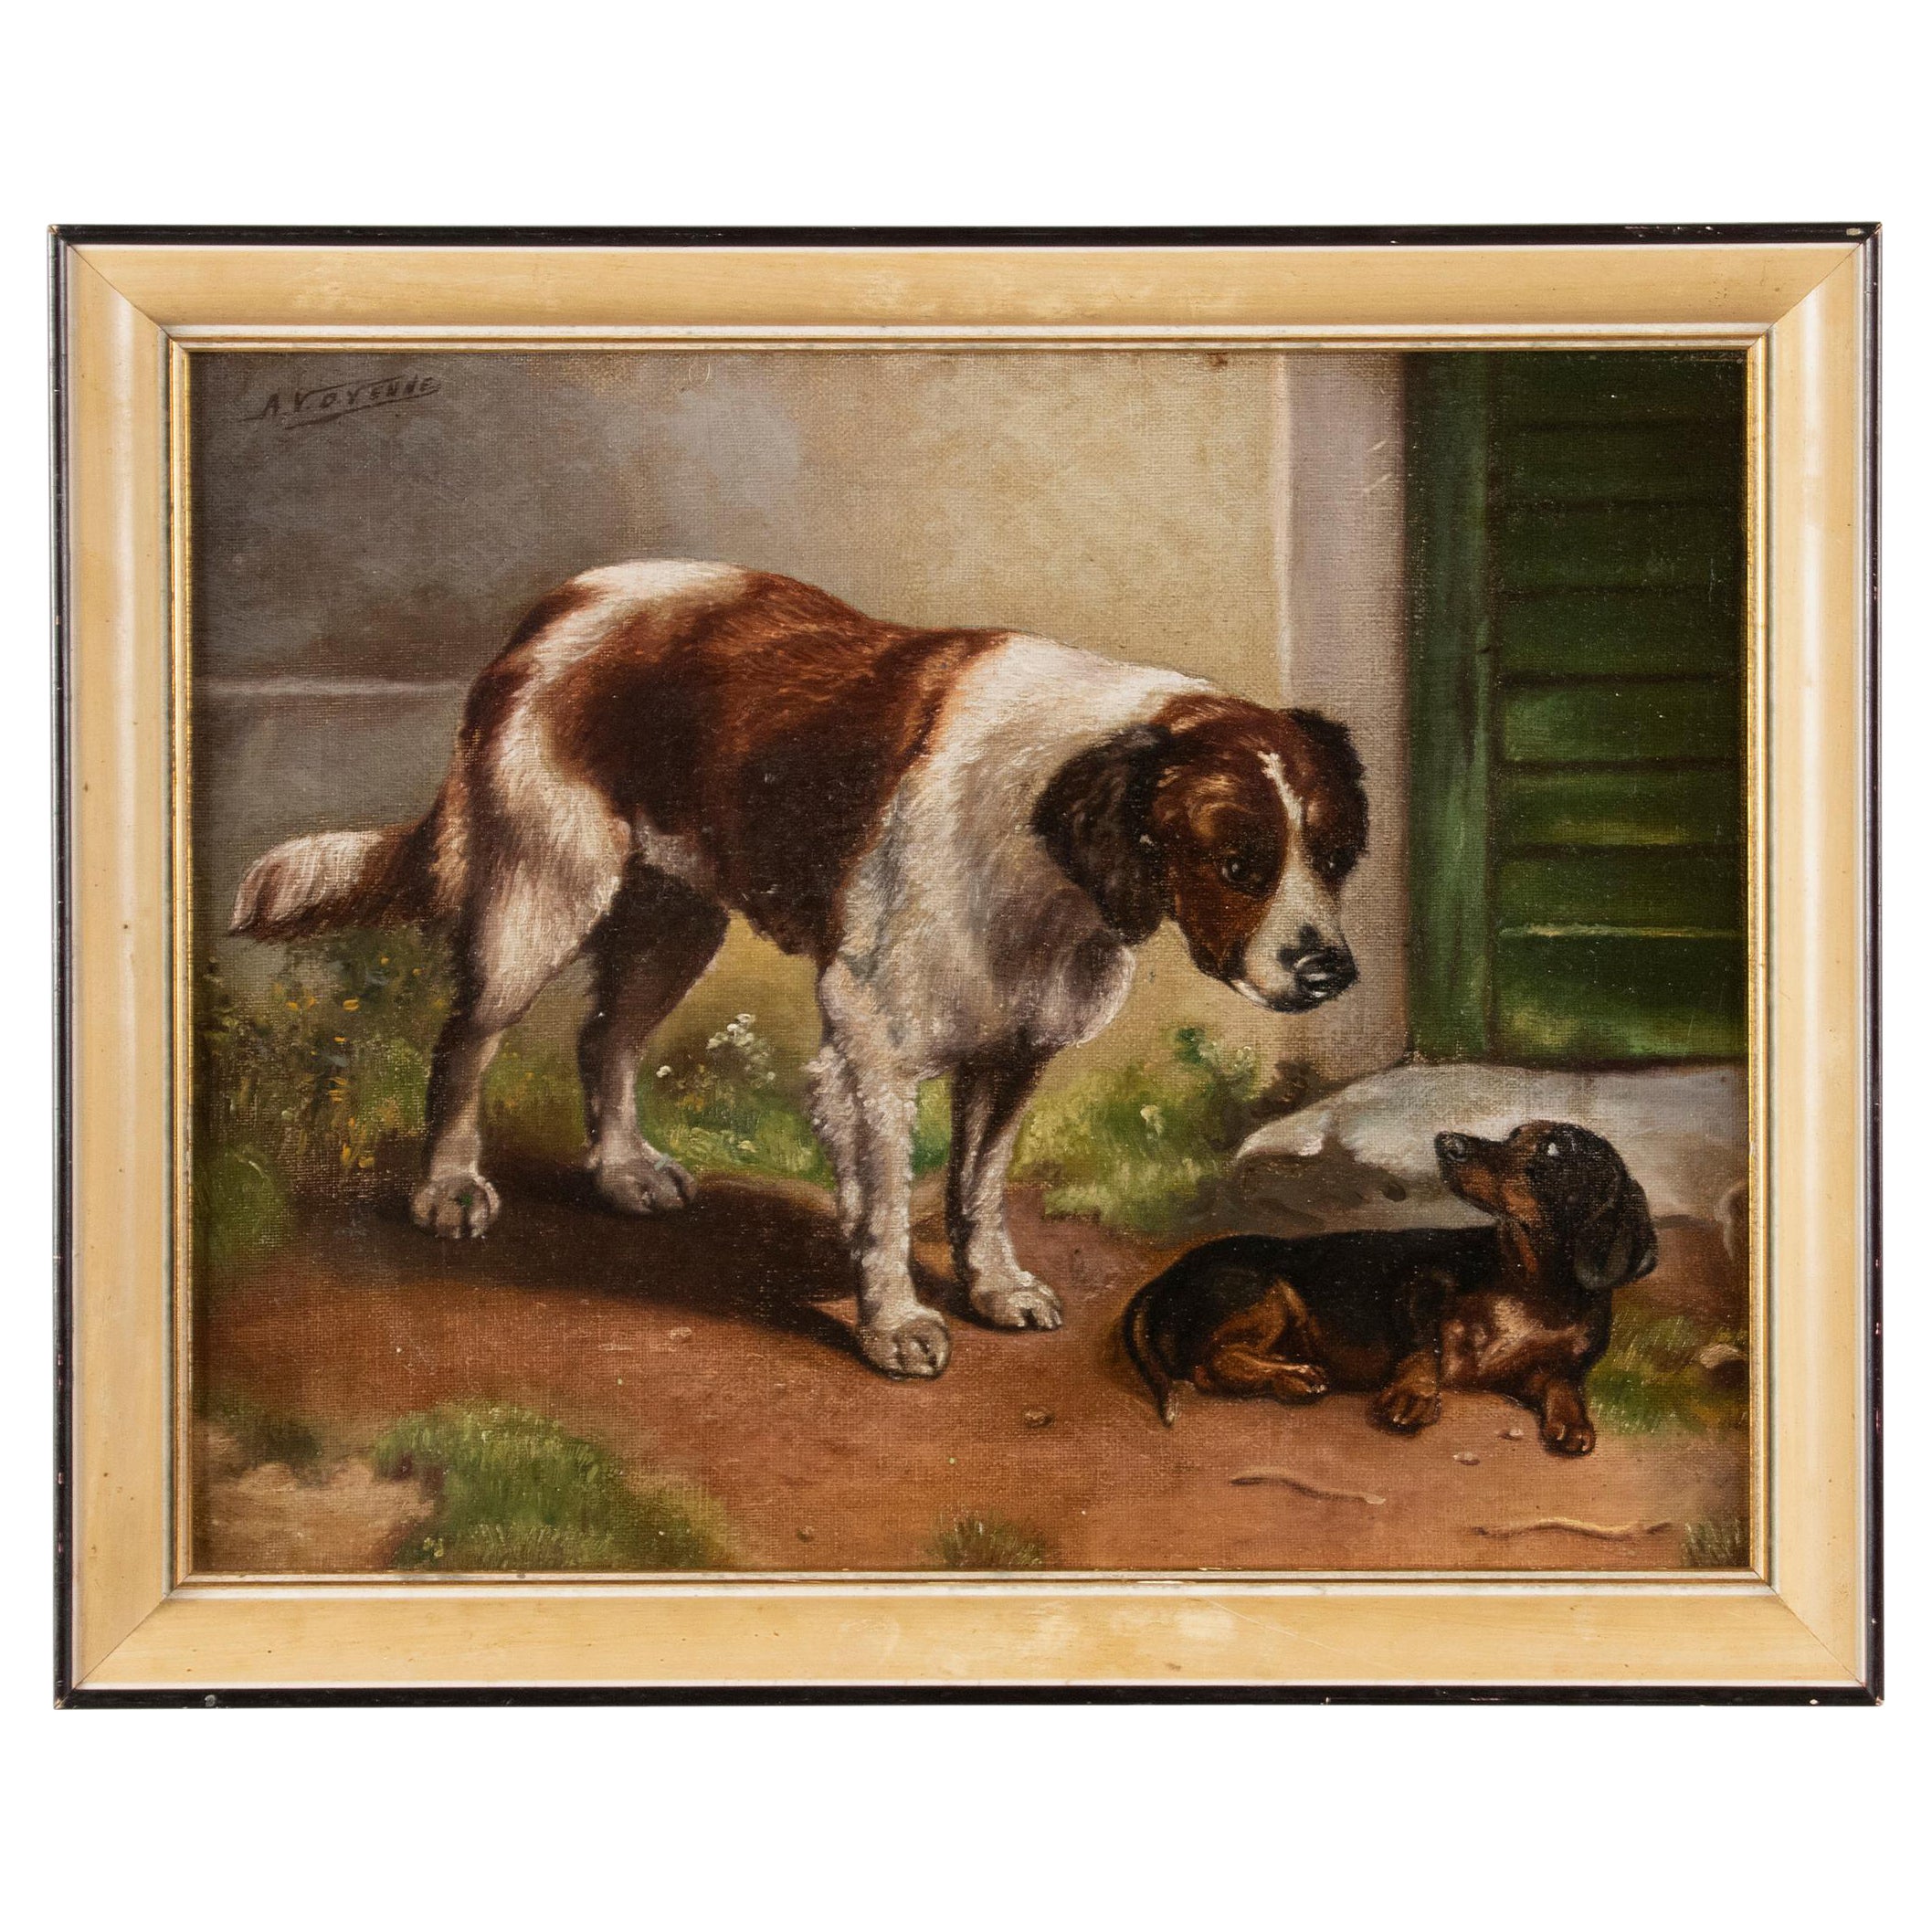 Antique Belgium Oil Painting Border Collie and a Dachshund Dog, A van de Venne